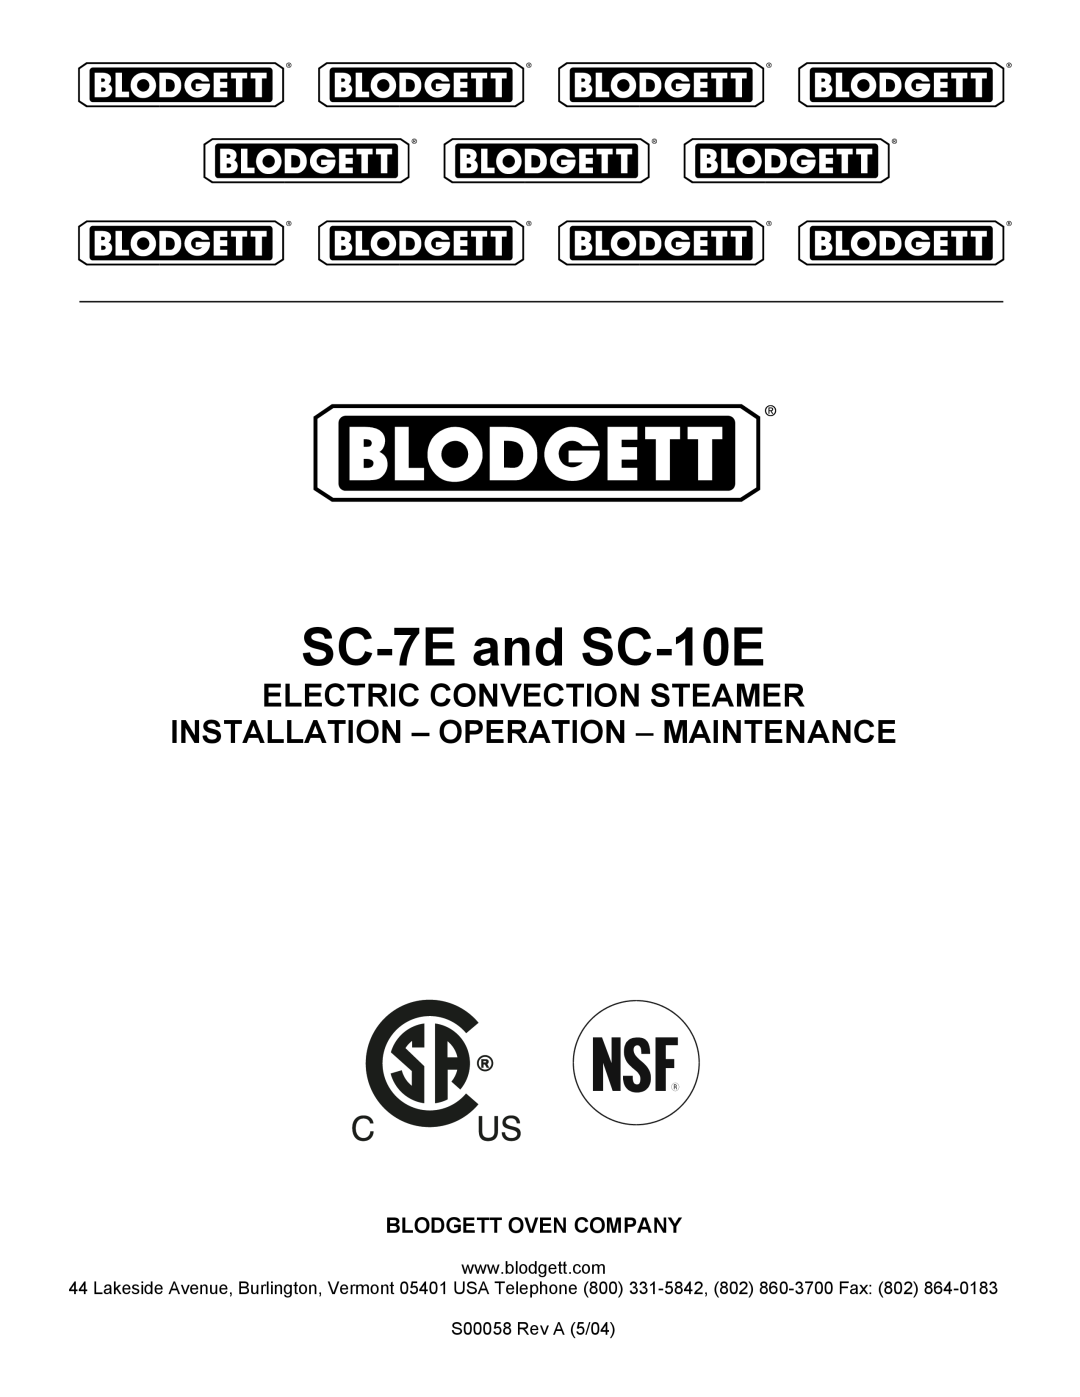 Blodgett manual SC-7Eand SC-10E, Electric Convection Steamer, Installation - Operation - Maintenance 